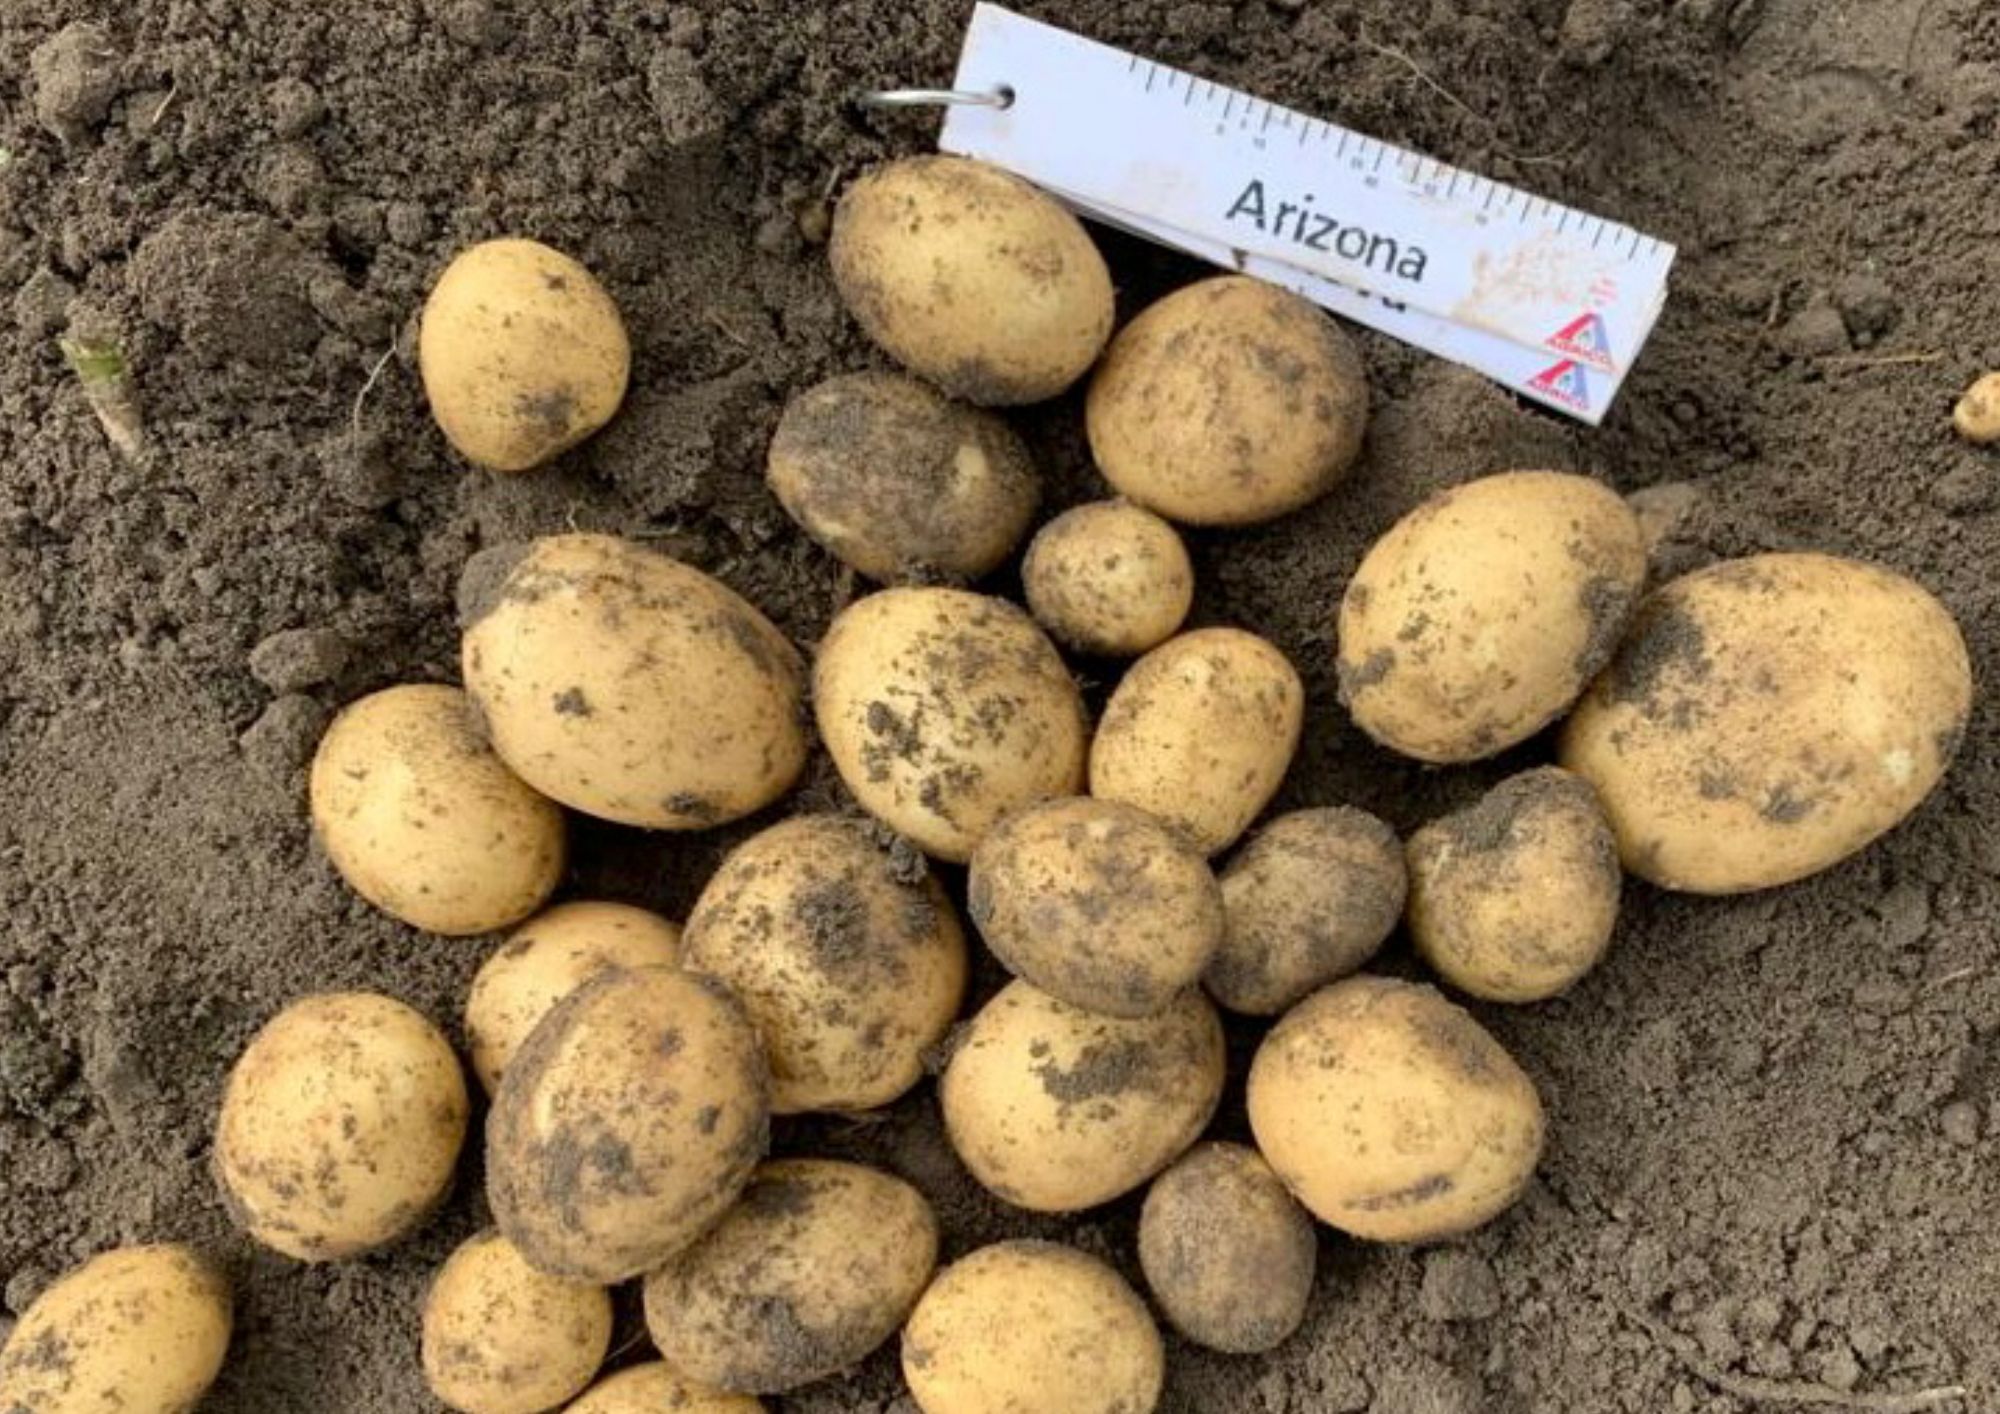 Romagnoli F.lli Spa: good results for Sicilian new potatoes